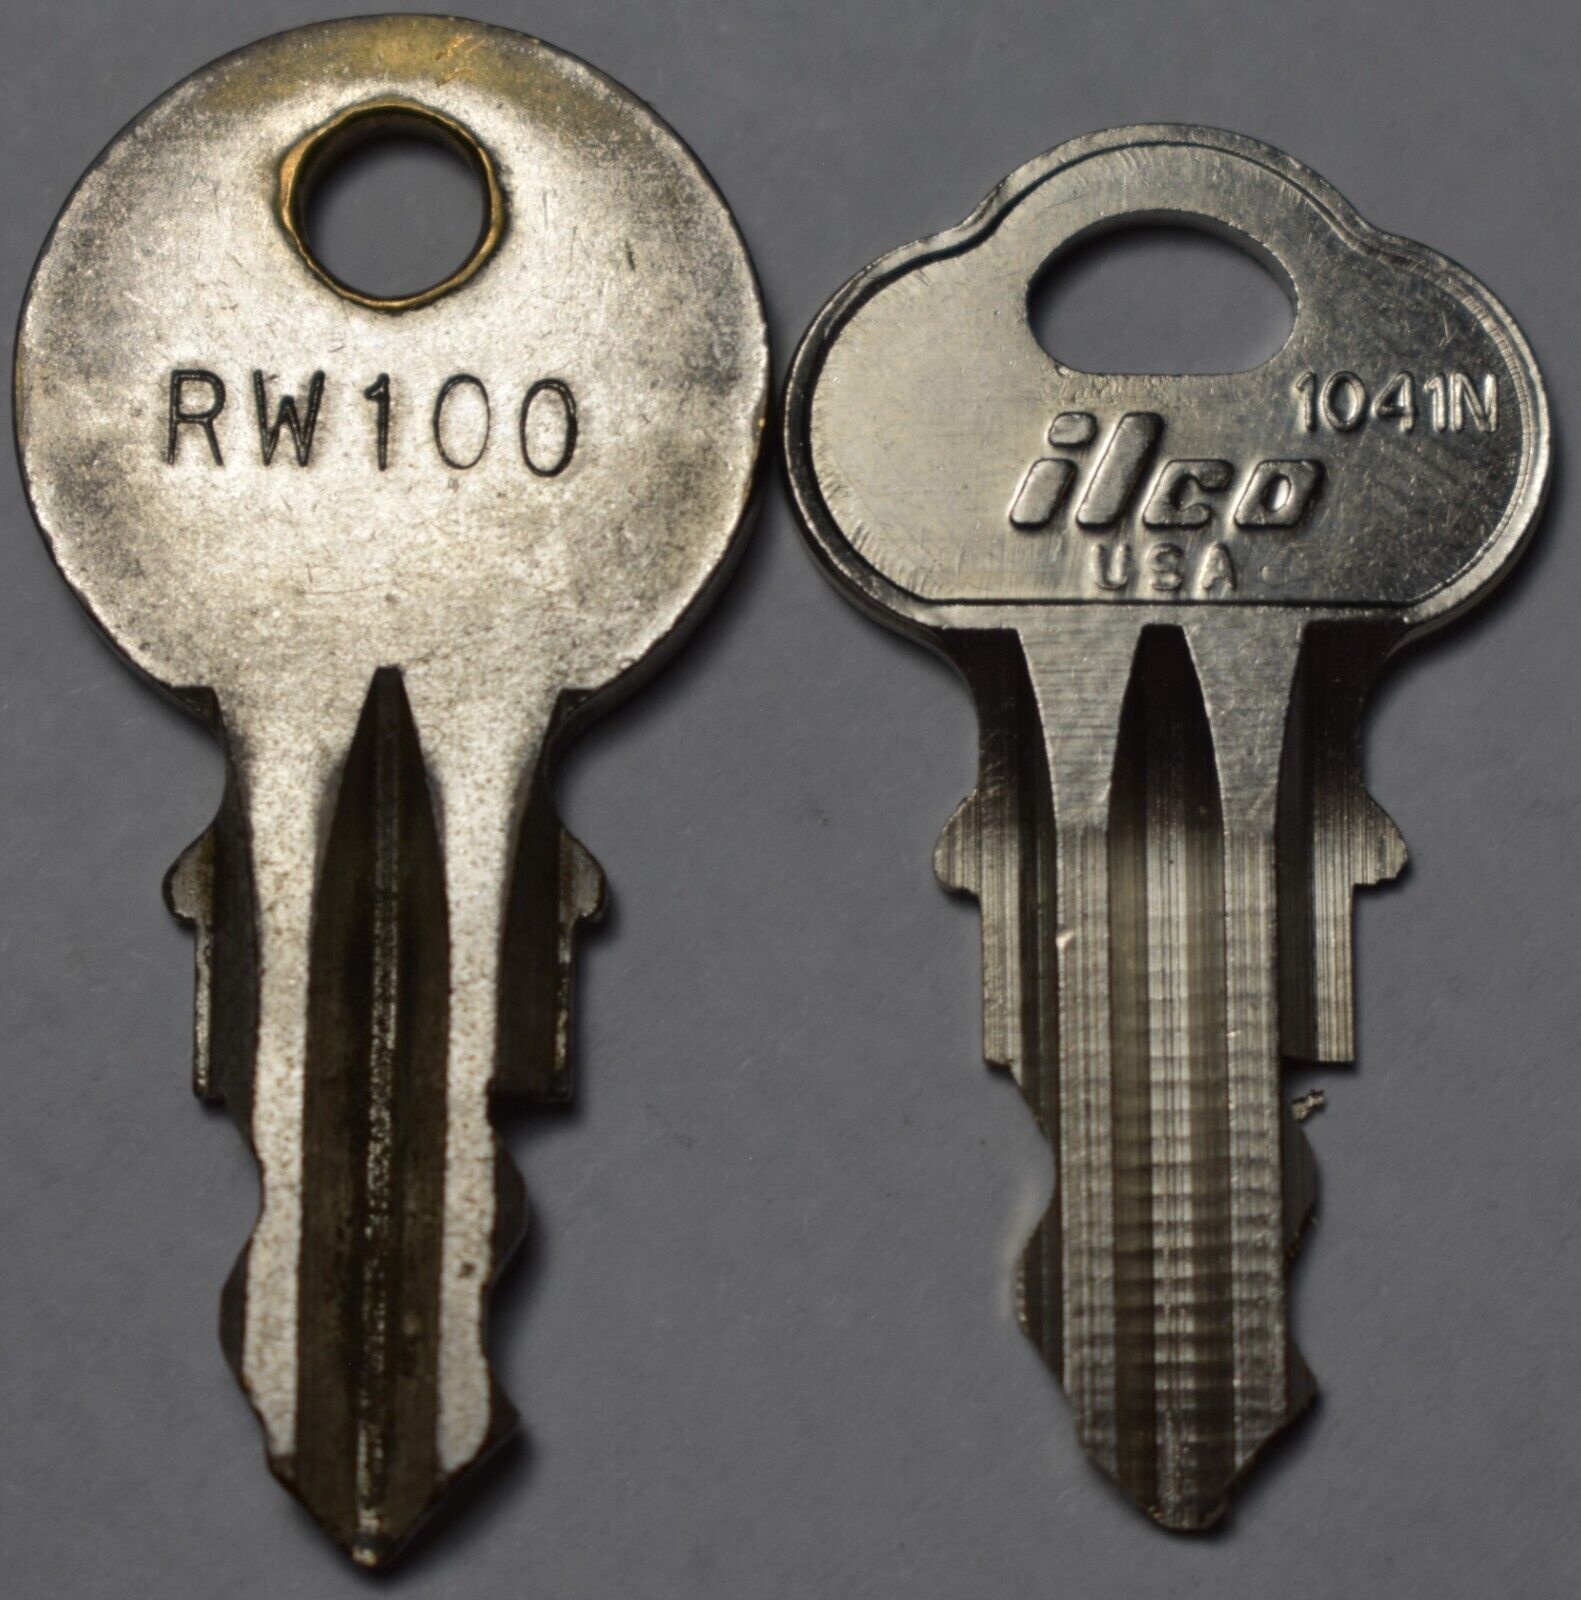 *NEW* Wurlitzer RW100 Cabinet Key For Models 3100, 3110, 3200, 3210 & Some 3300